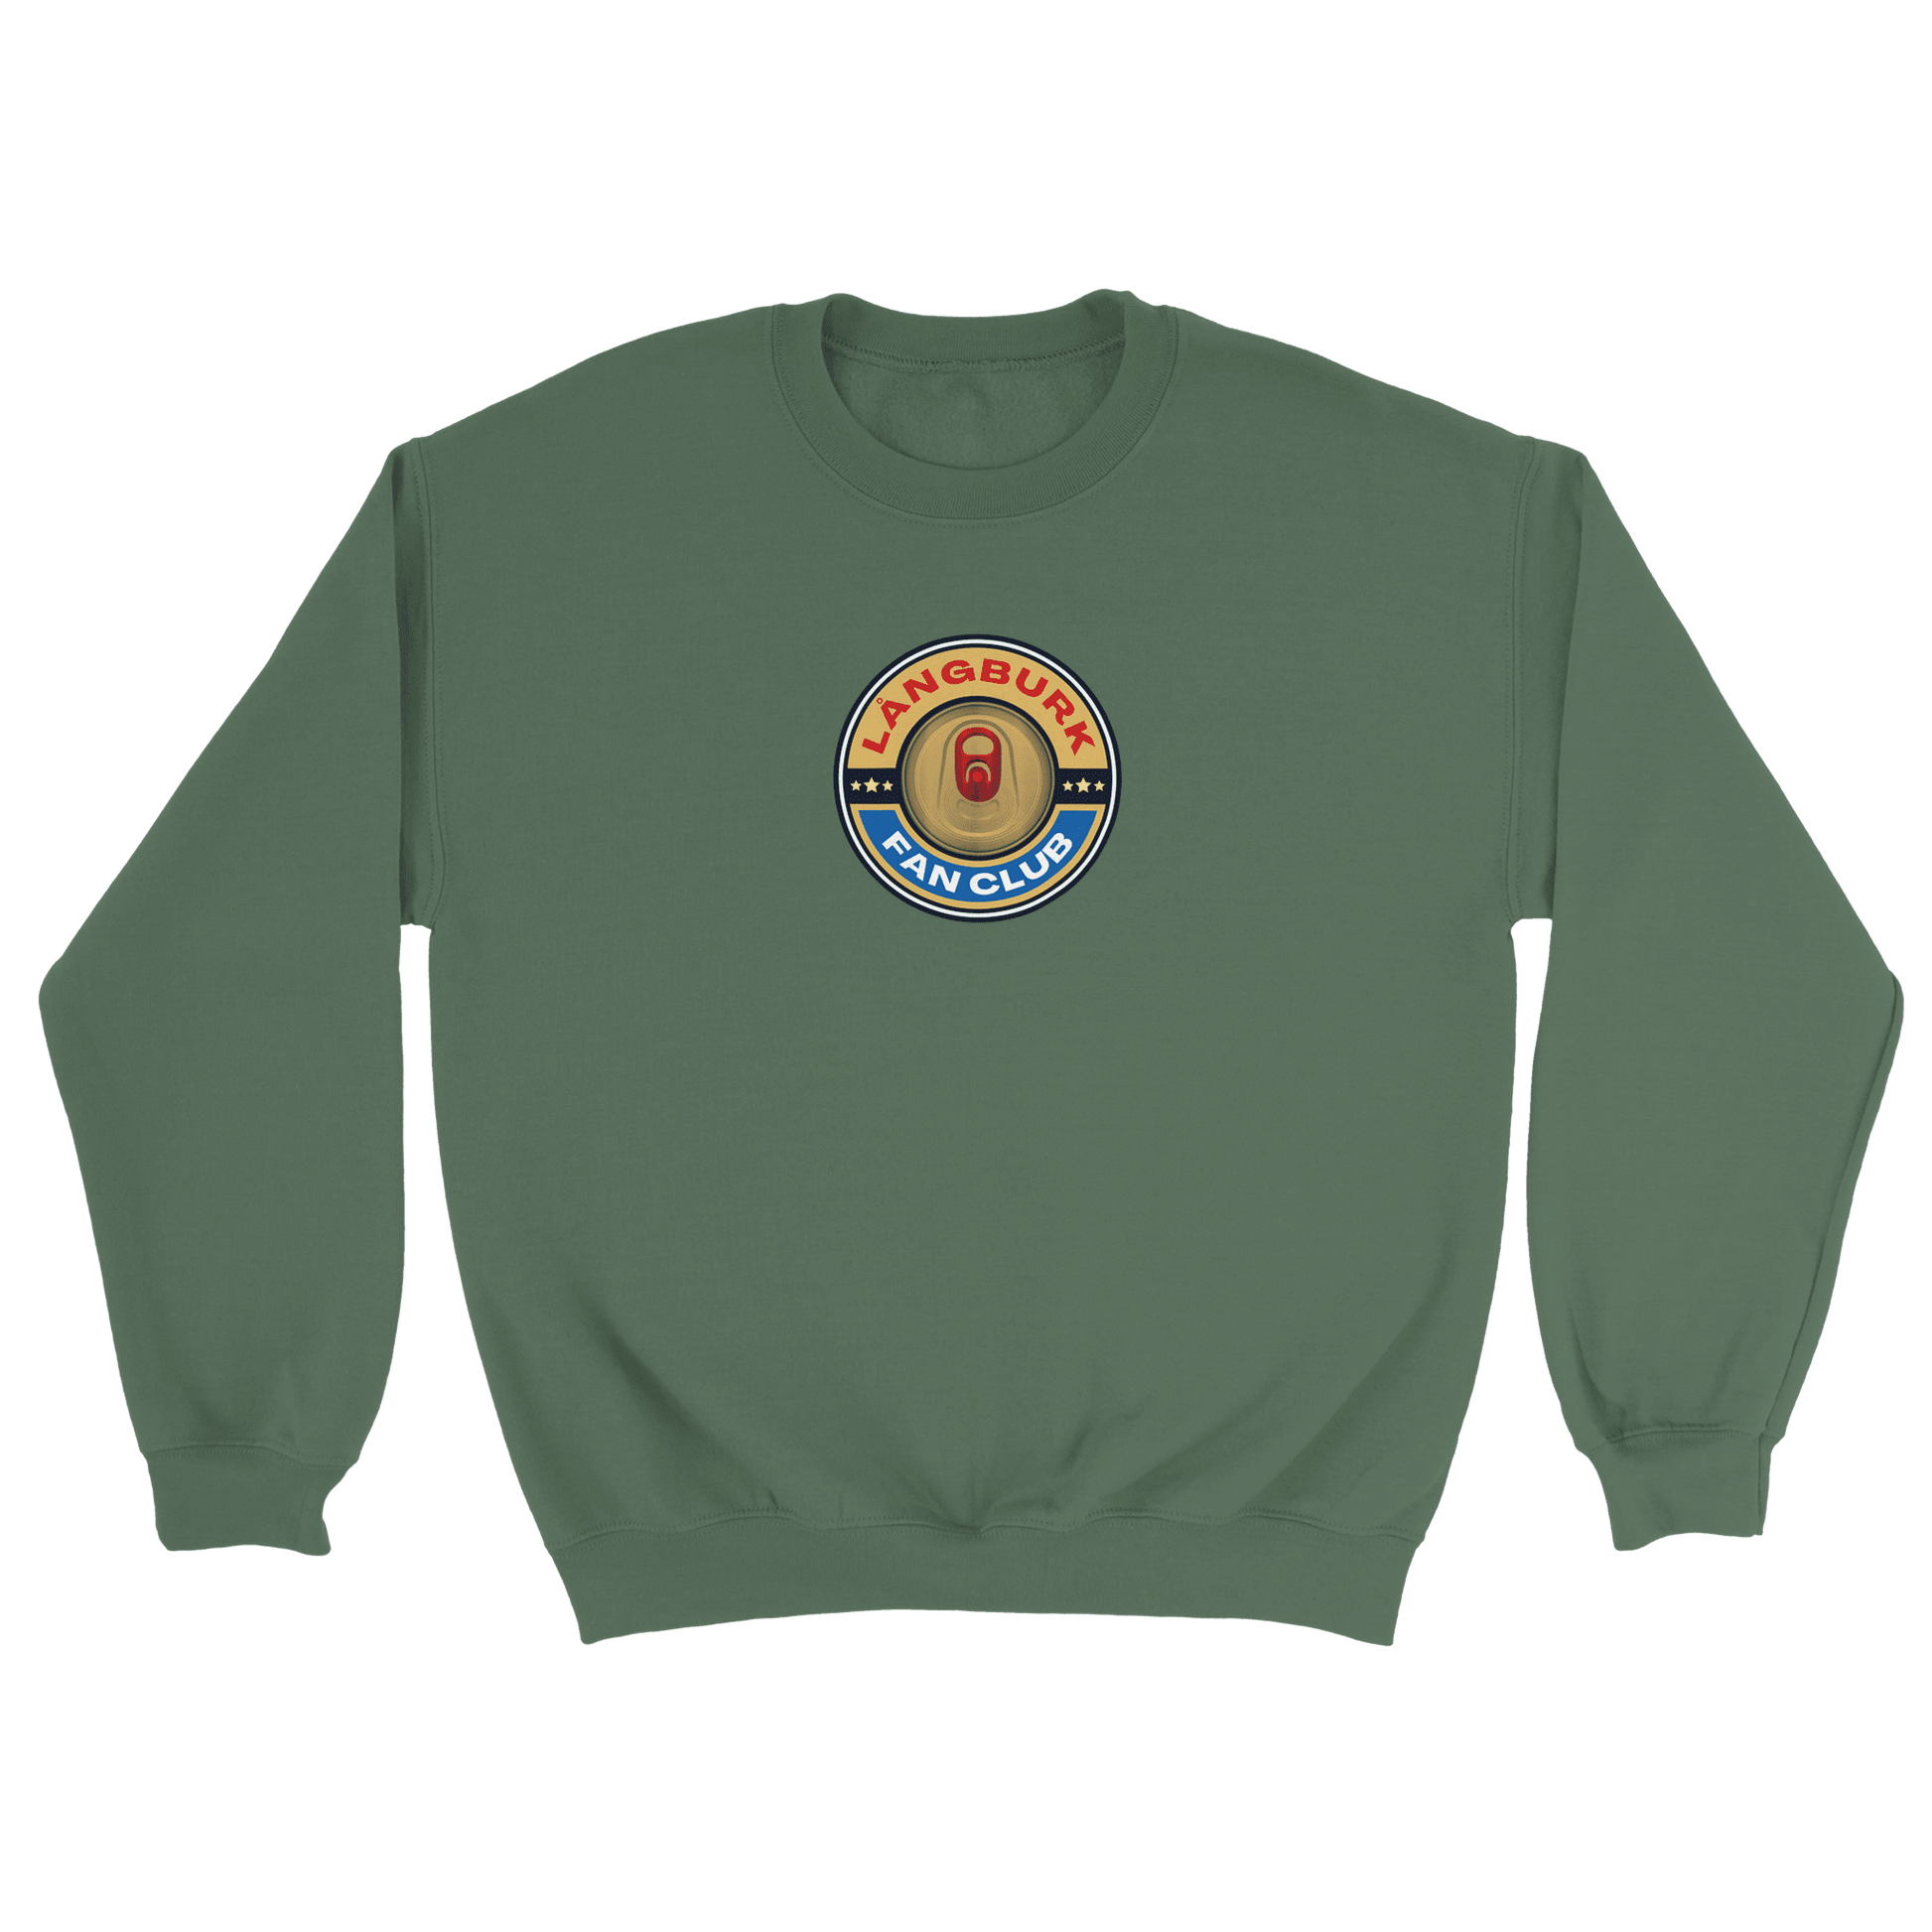 Långburk Fan Club Norrland Edition - Sweatshirt Militärgrön